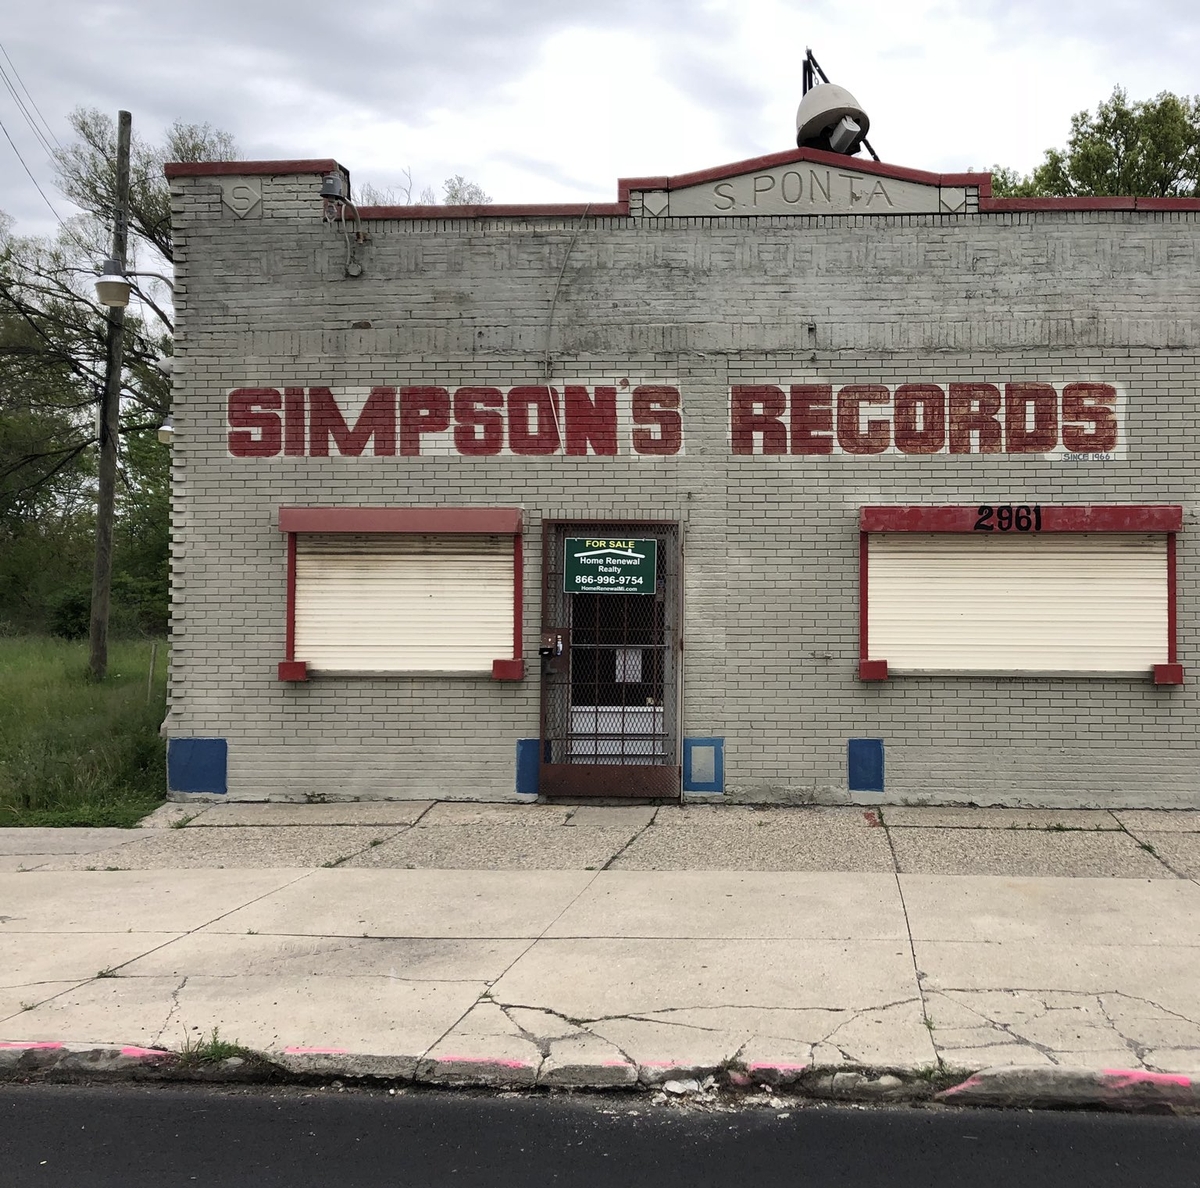 Simpson's Records in Detroit